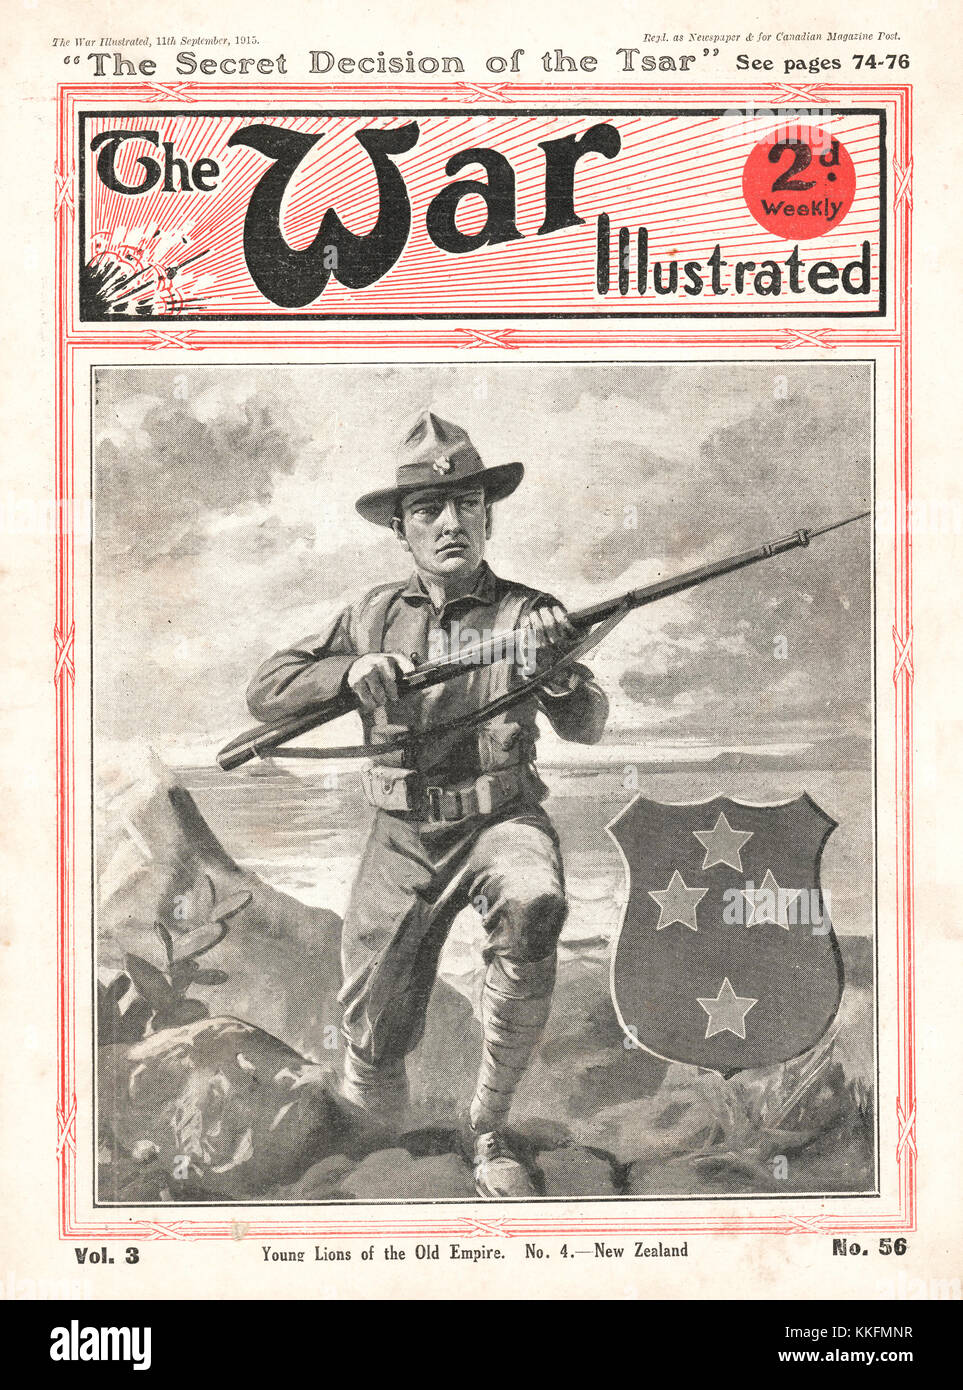 1915 Guerra illustrata Nuova Zelanda soldato dell'esercito Foto Stock